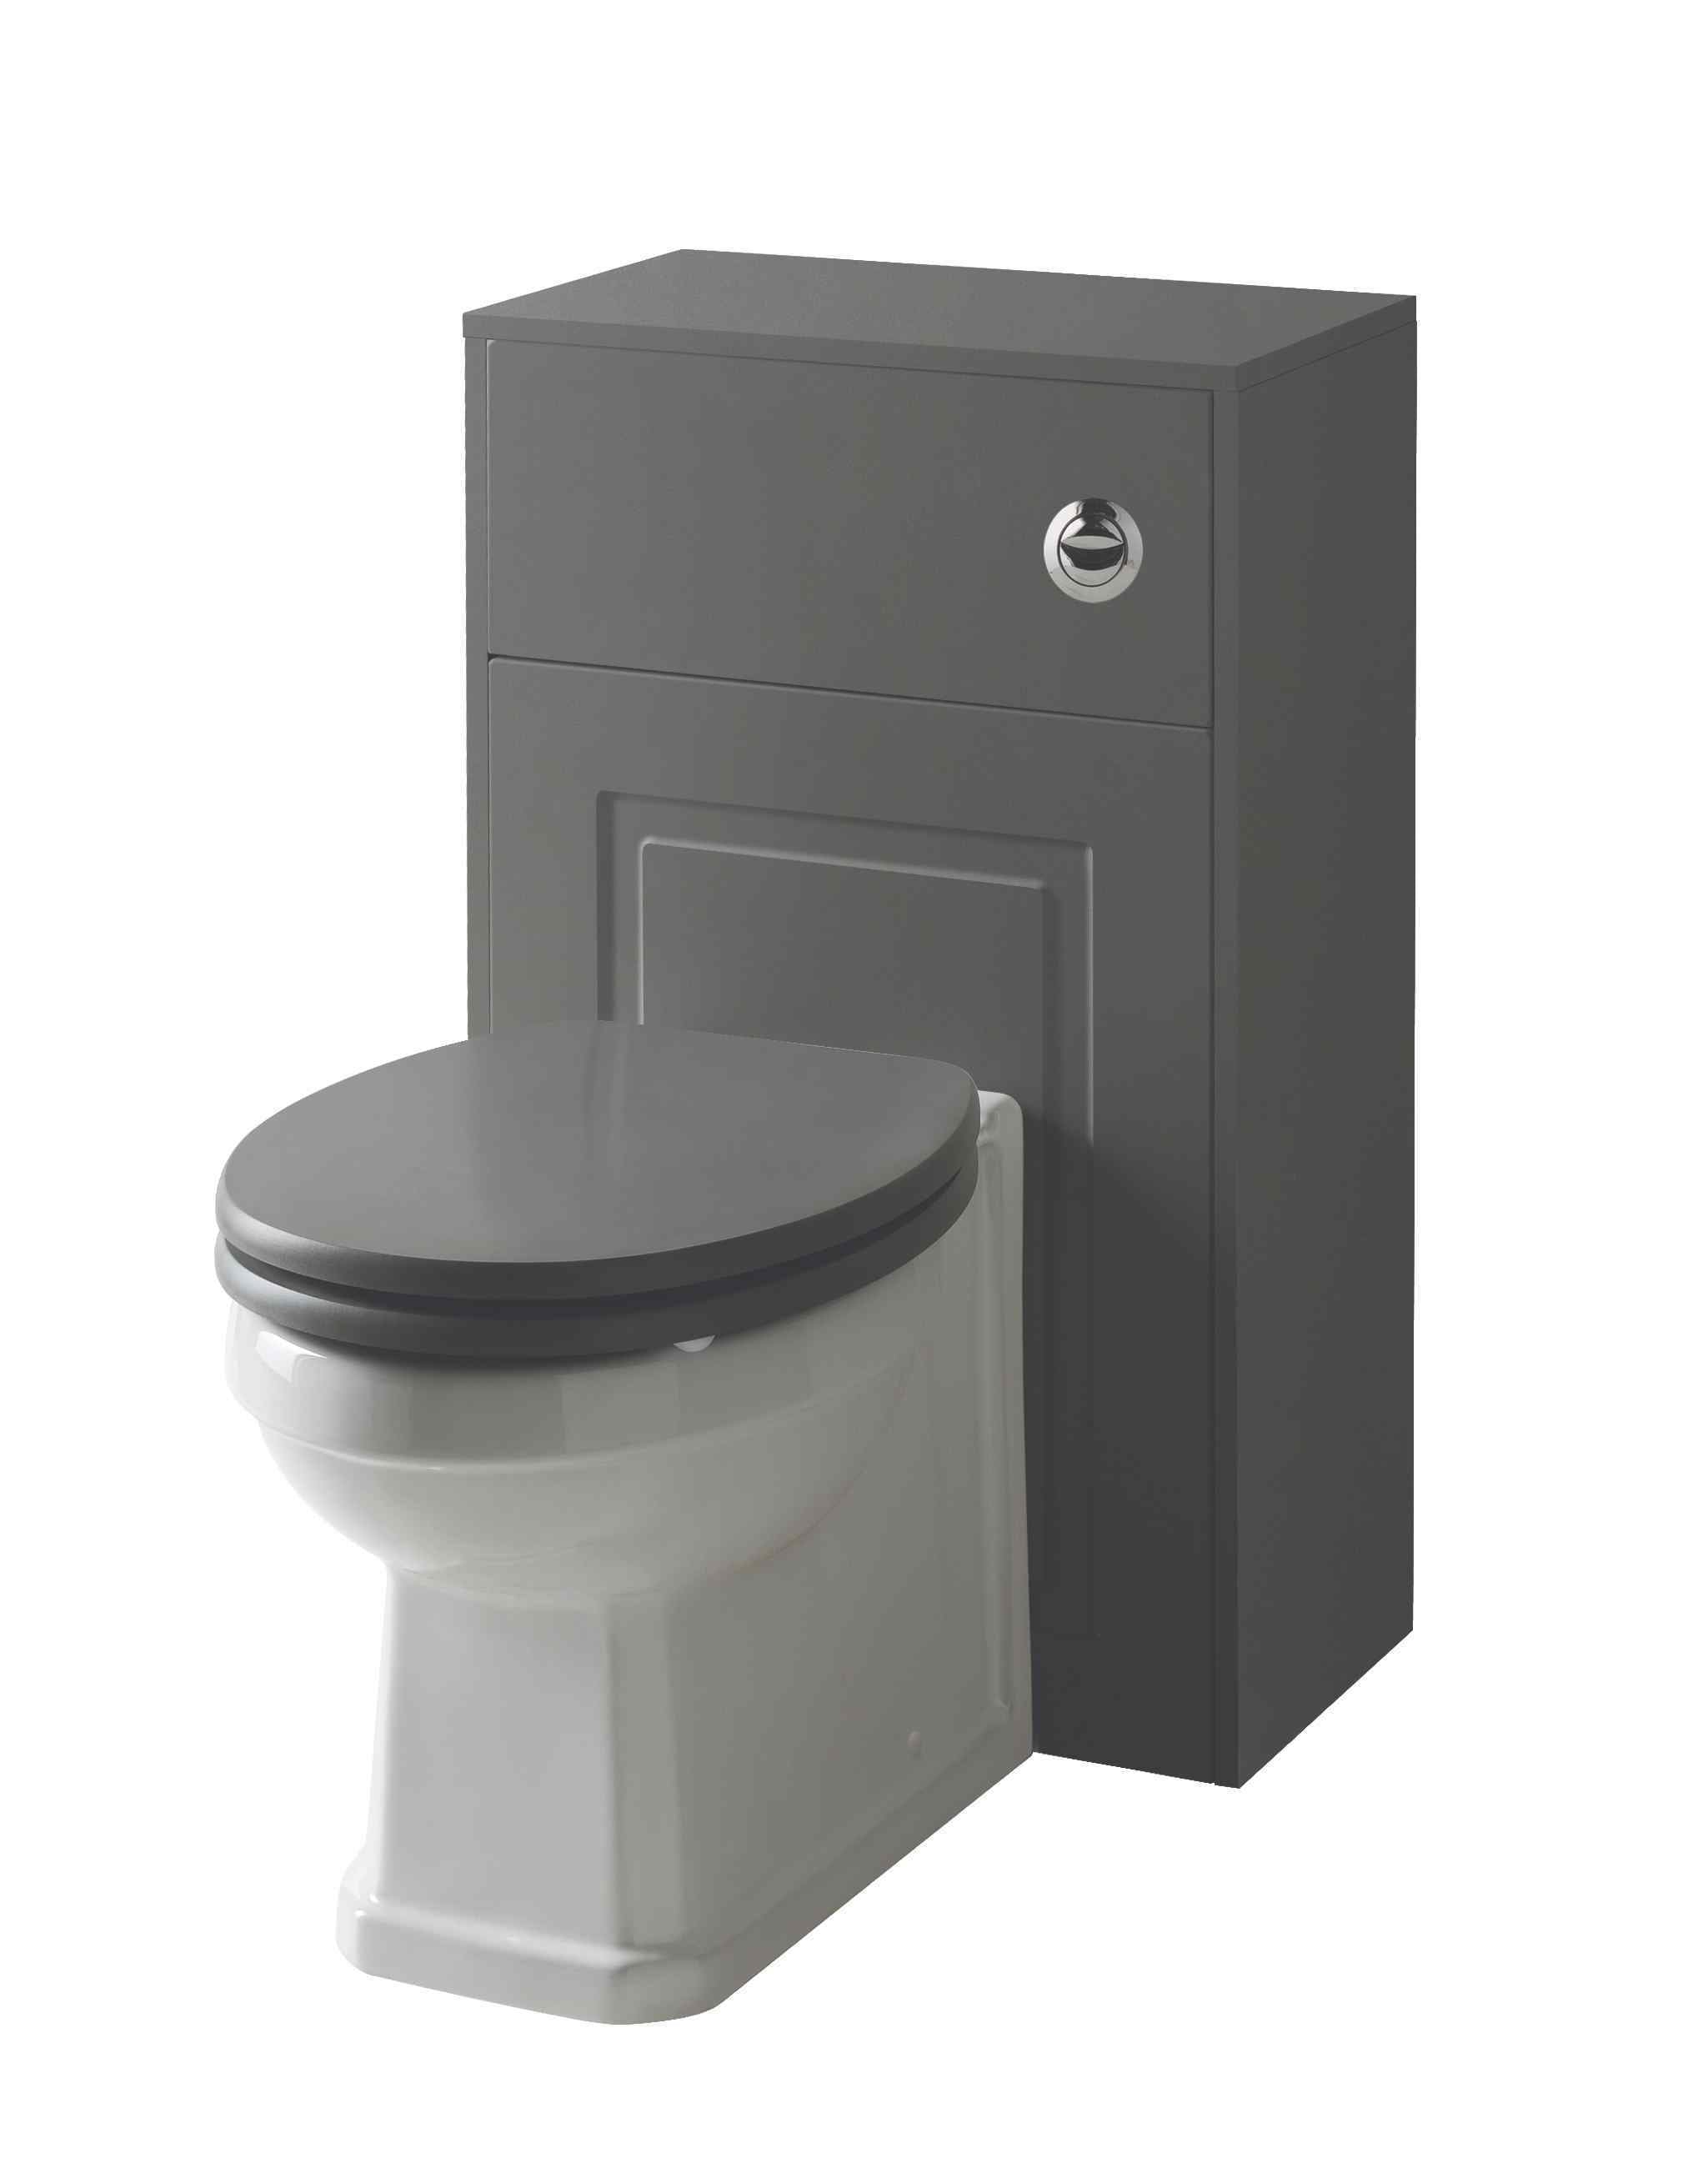 Astley - Matt Grey Toilet and Basin Suite | Vanity Unit for Stylish Bathrooms